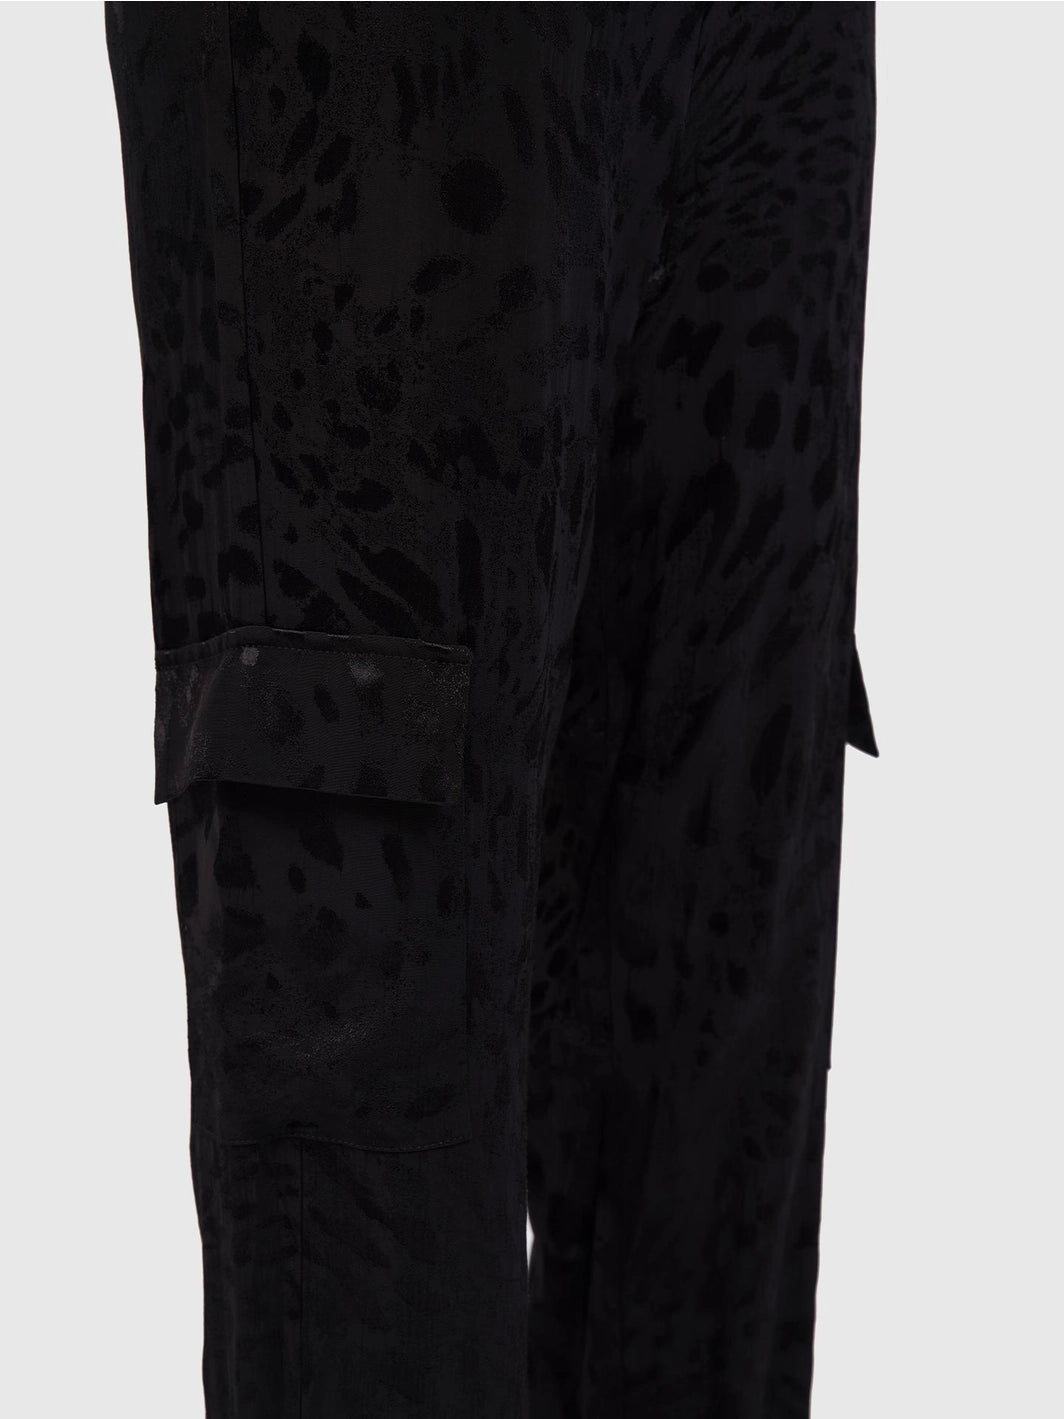 Patterned Black Elastic Pants